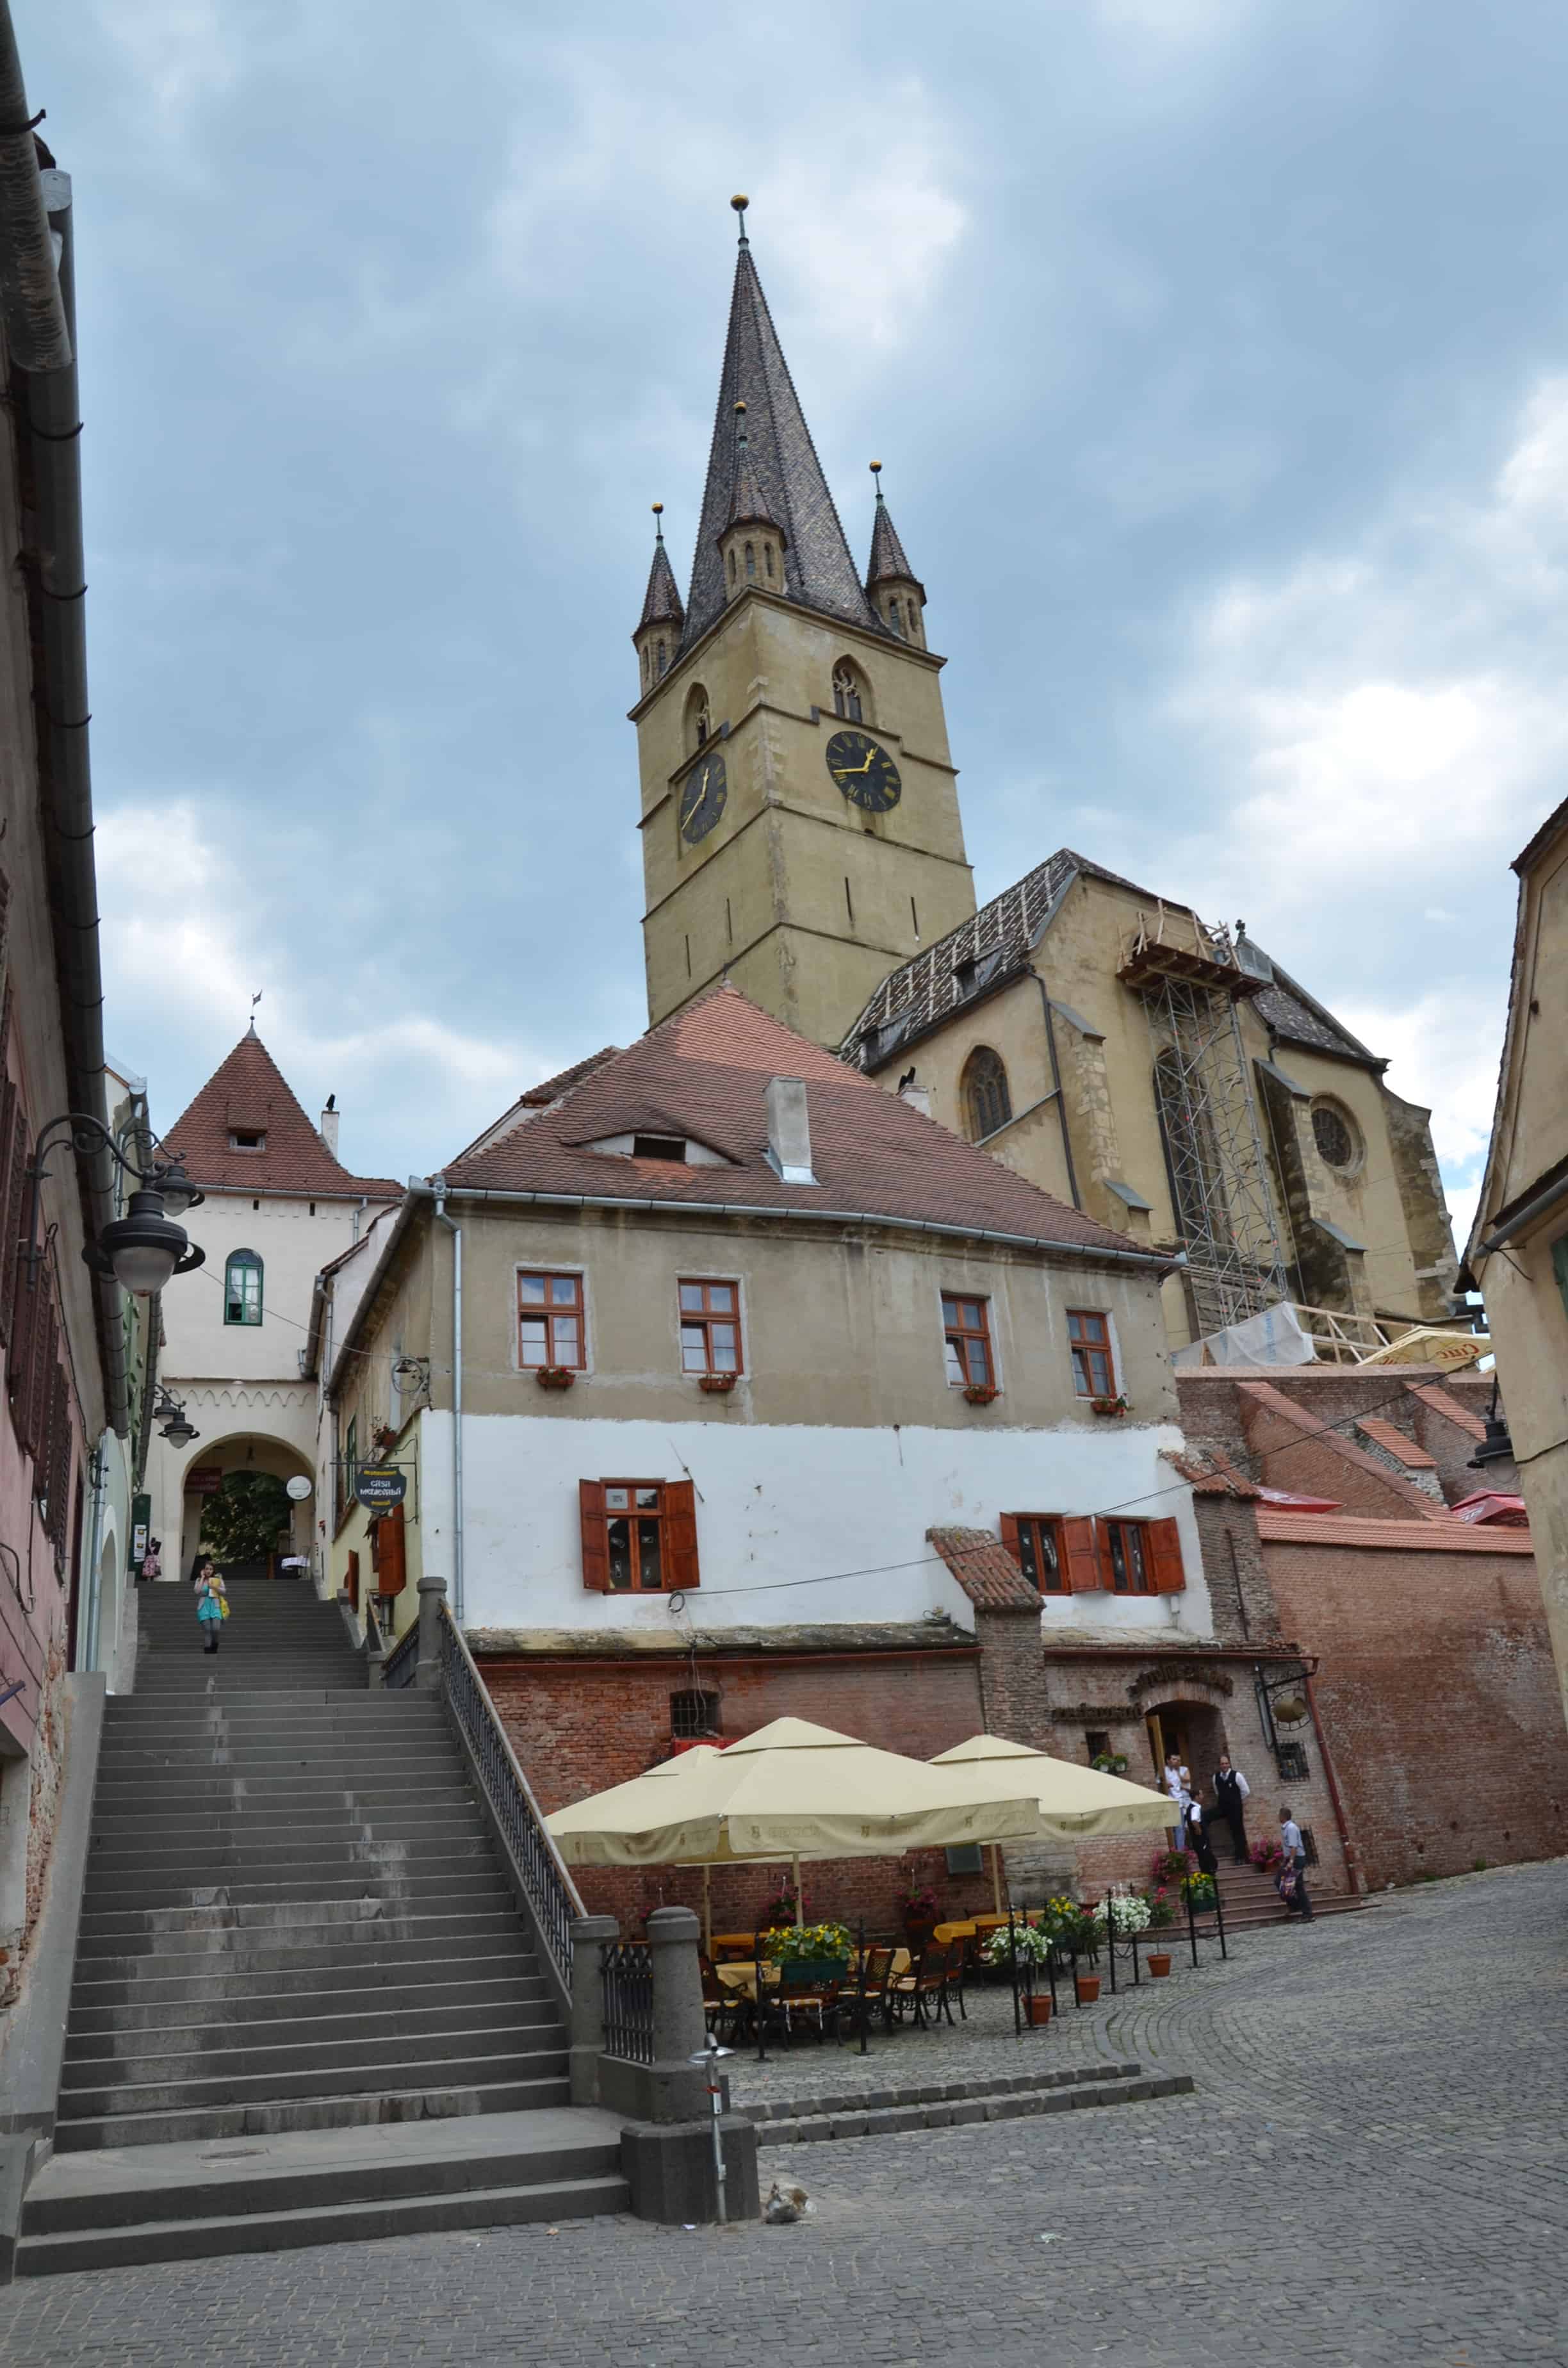 Stairs to Lower Town in Sibiu, Romania